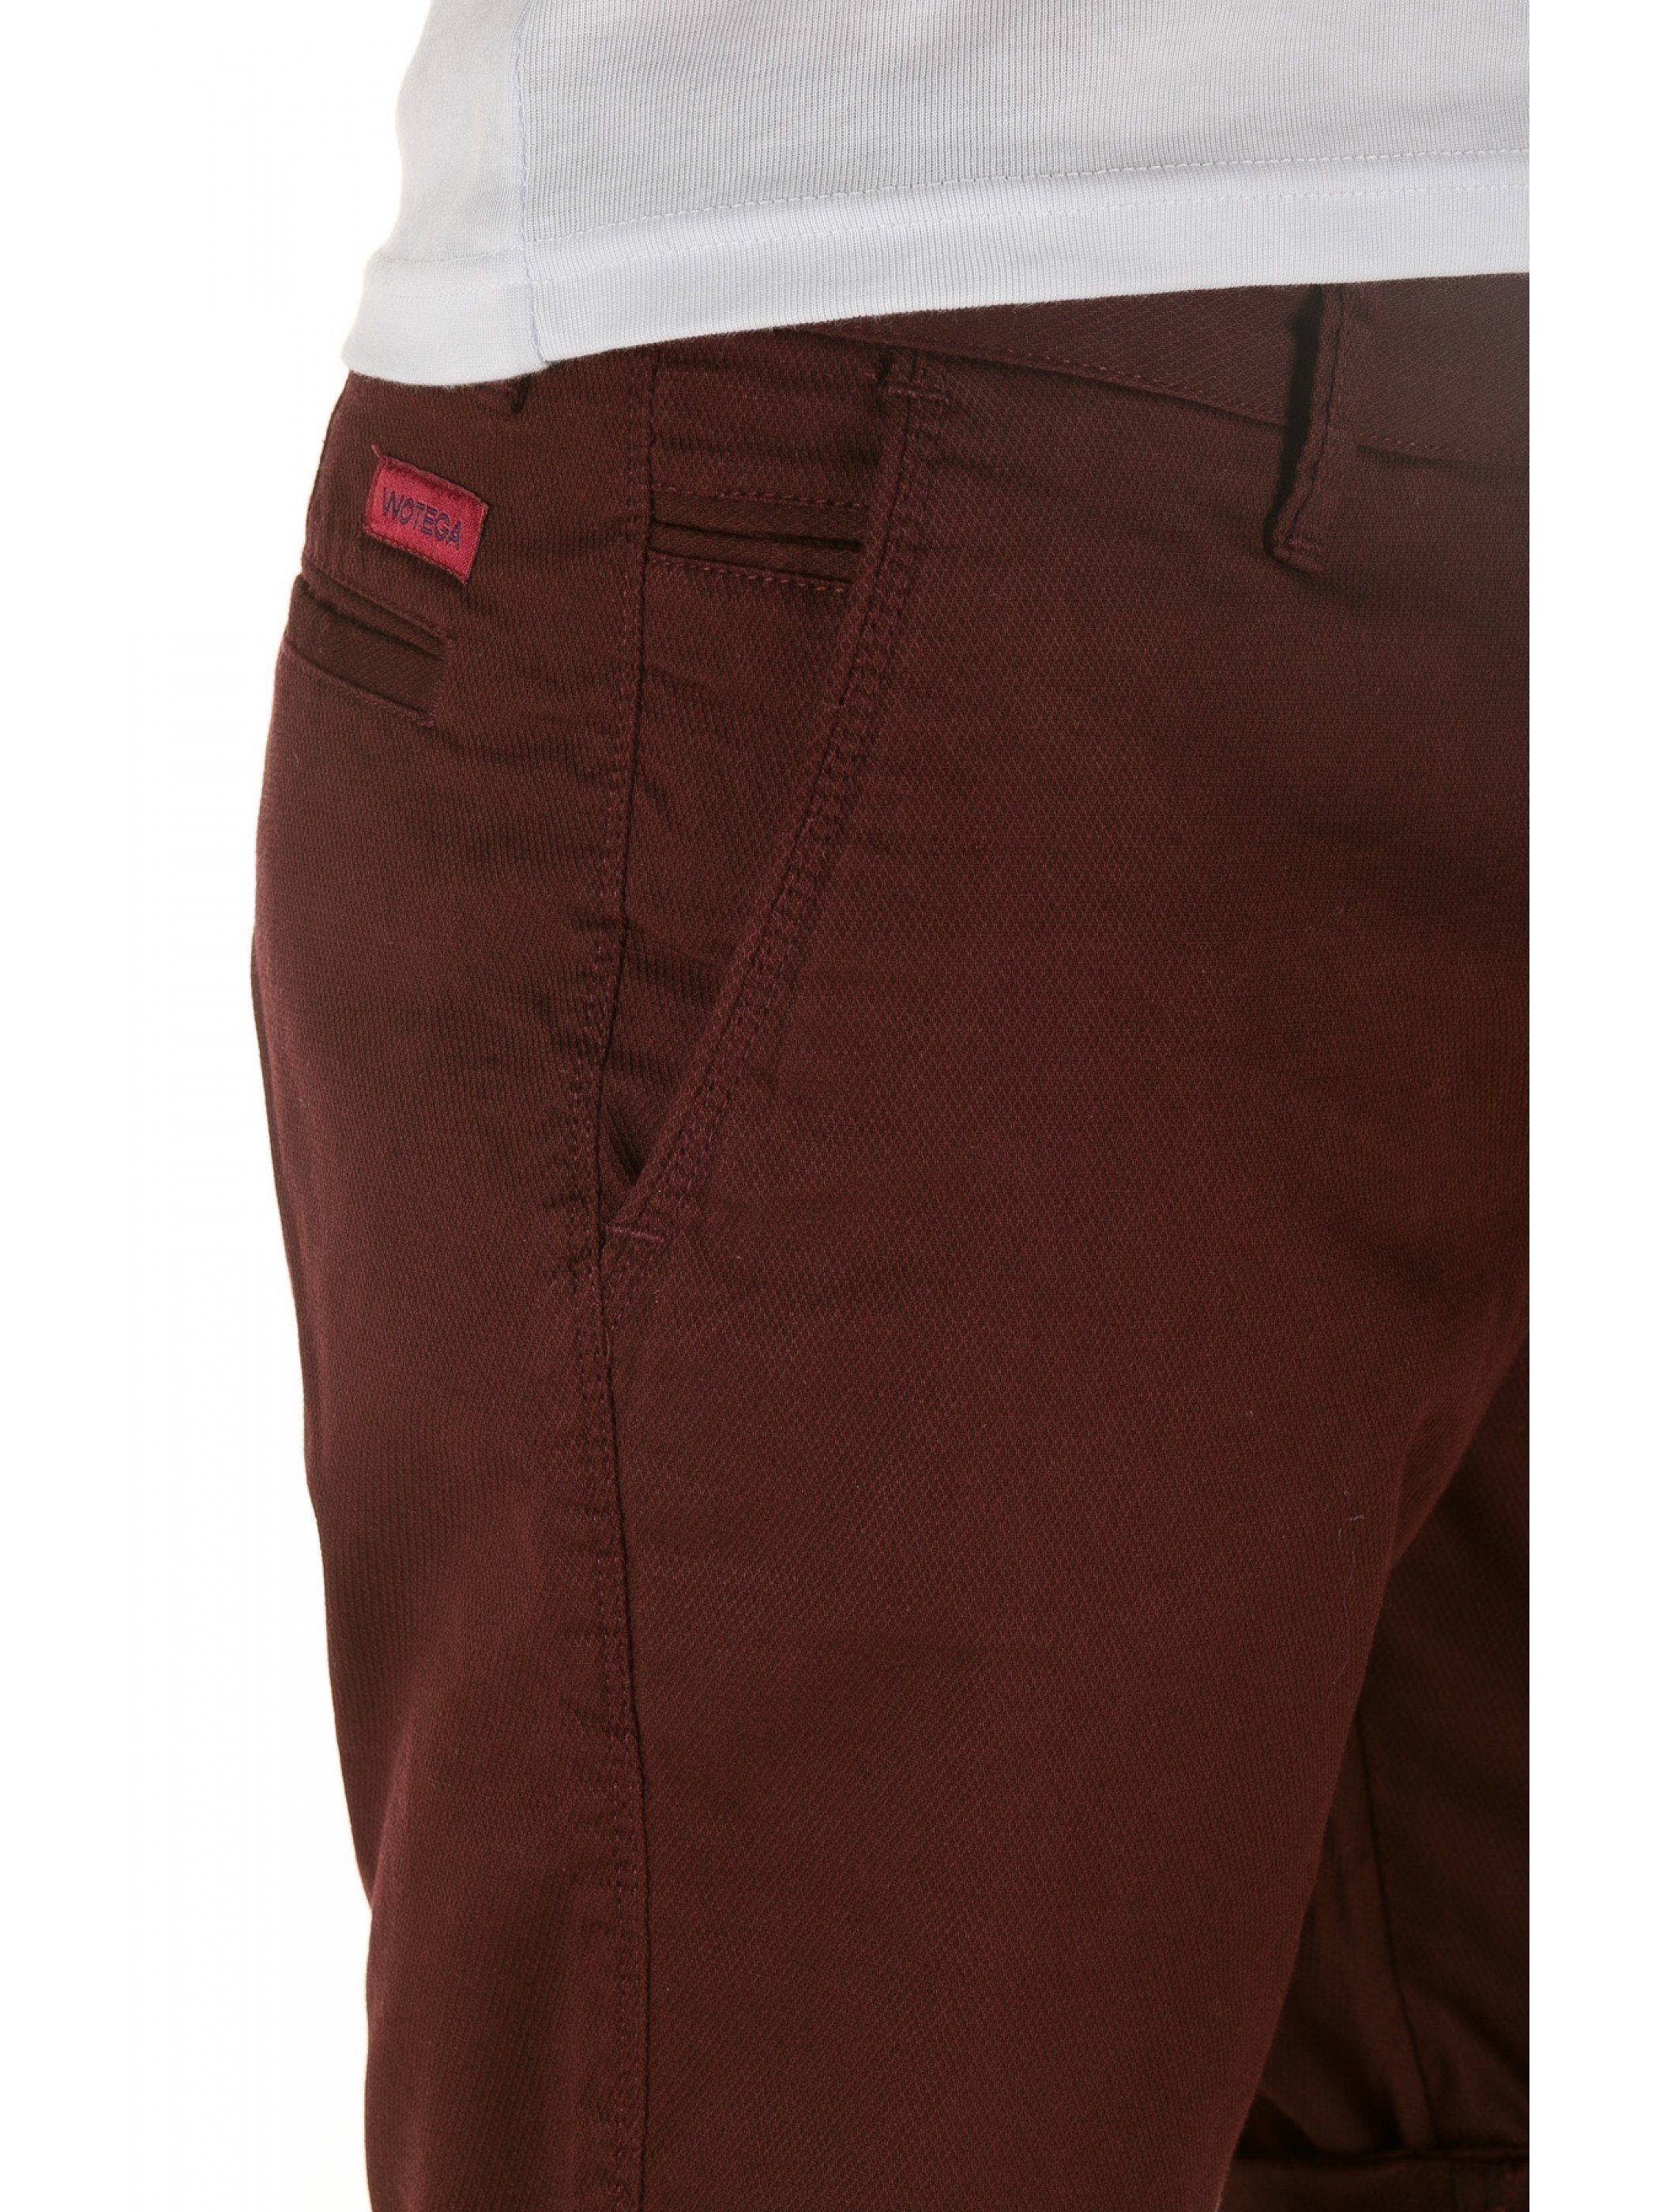 Shorts Rot (bitter chocolate191317) Shorts Penta Chino WOTEGA